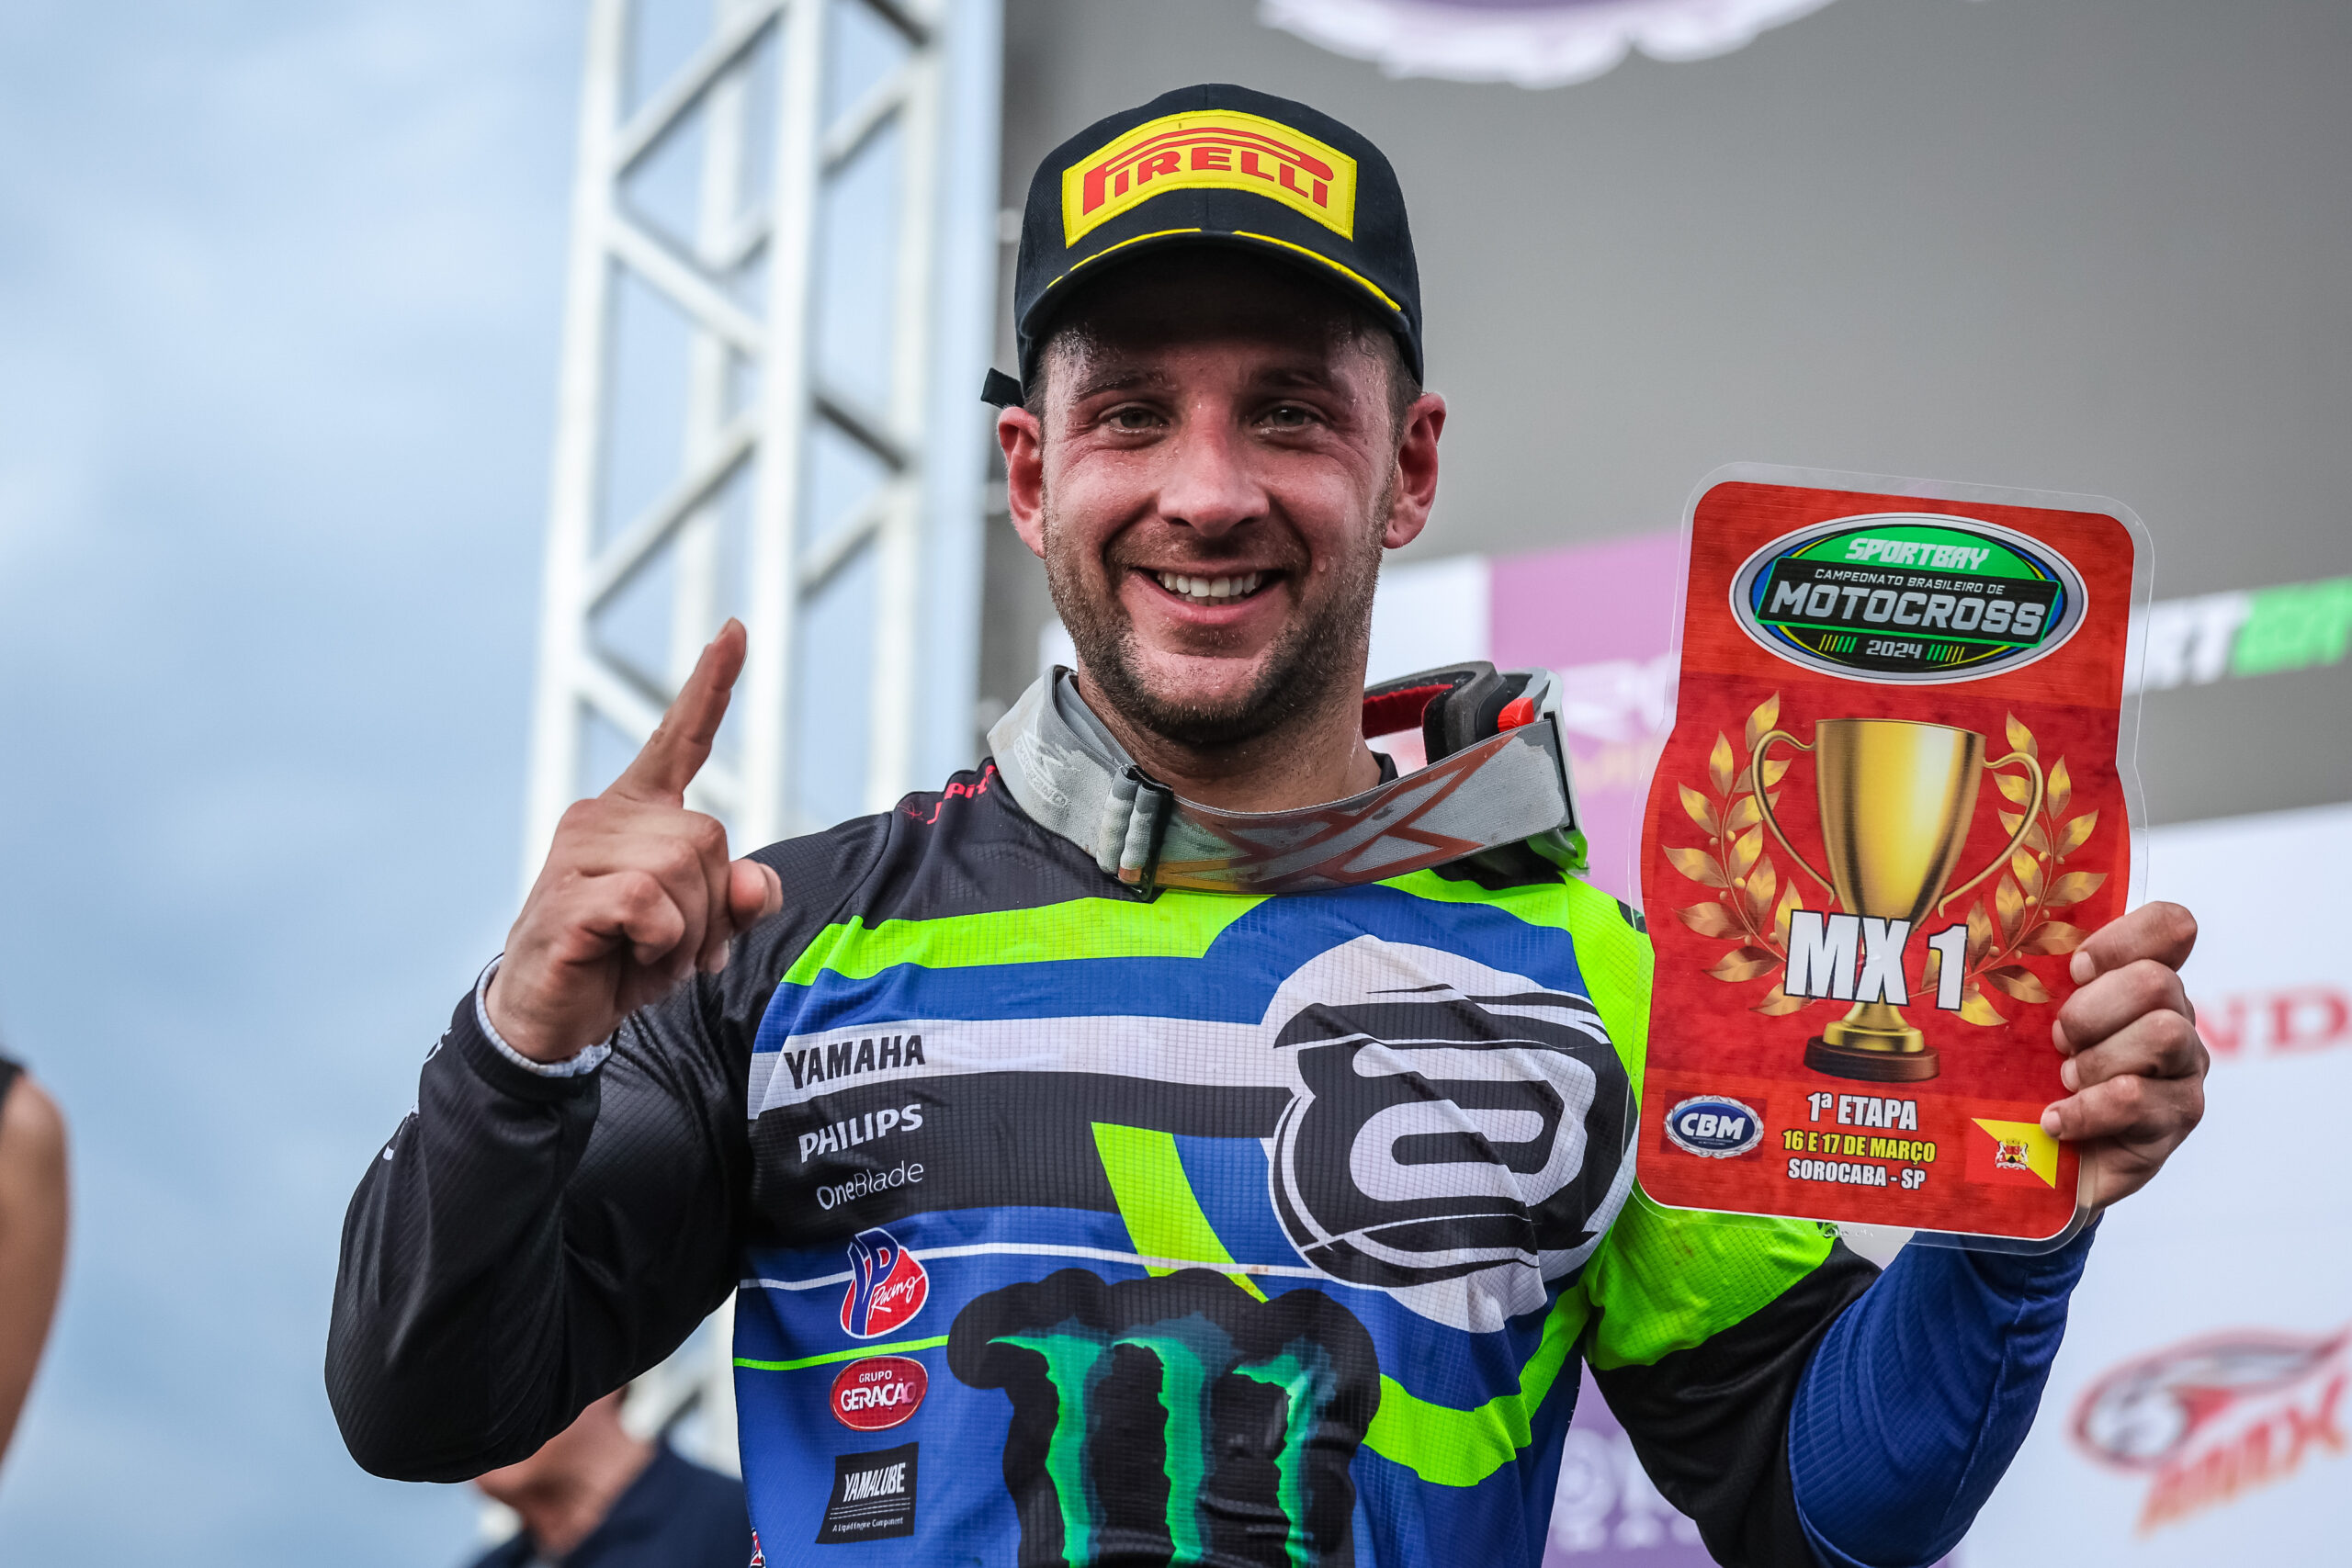 Paulo Alberto, Motocross Brasil, Sorocaba: “Estou bastante feliz” thumbnail